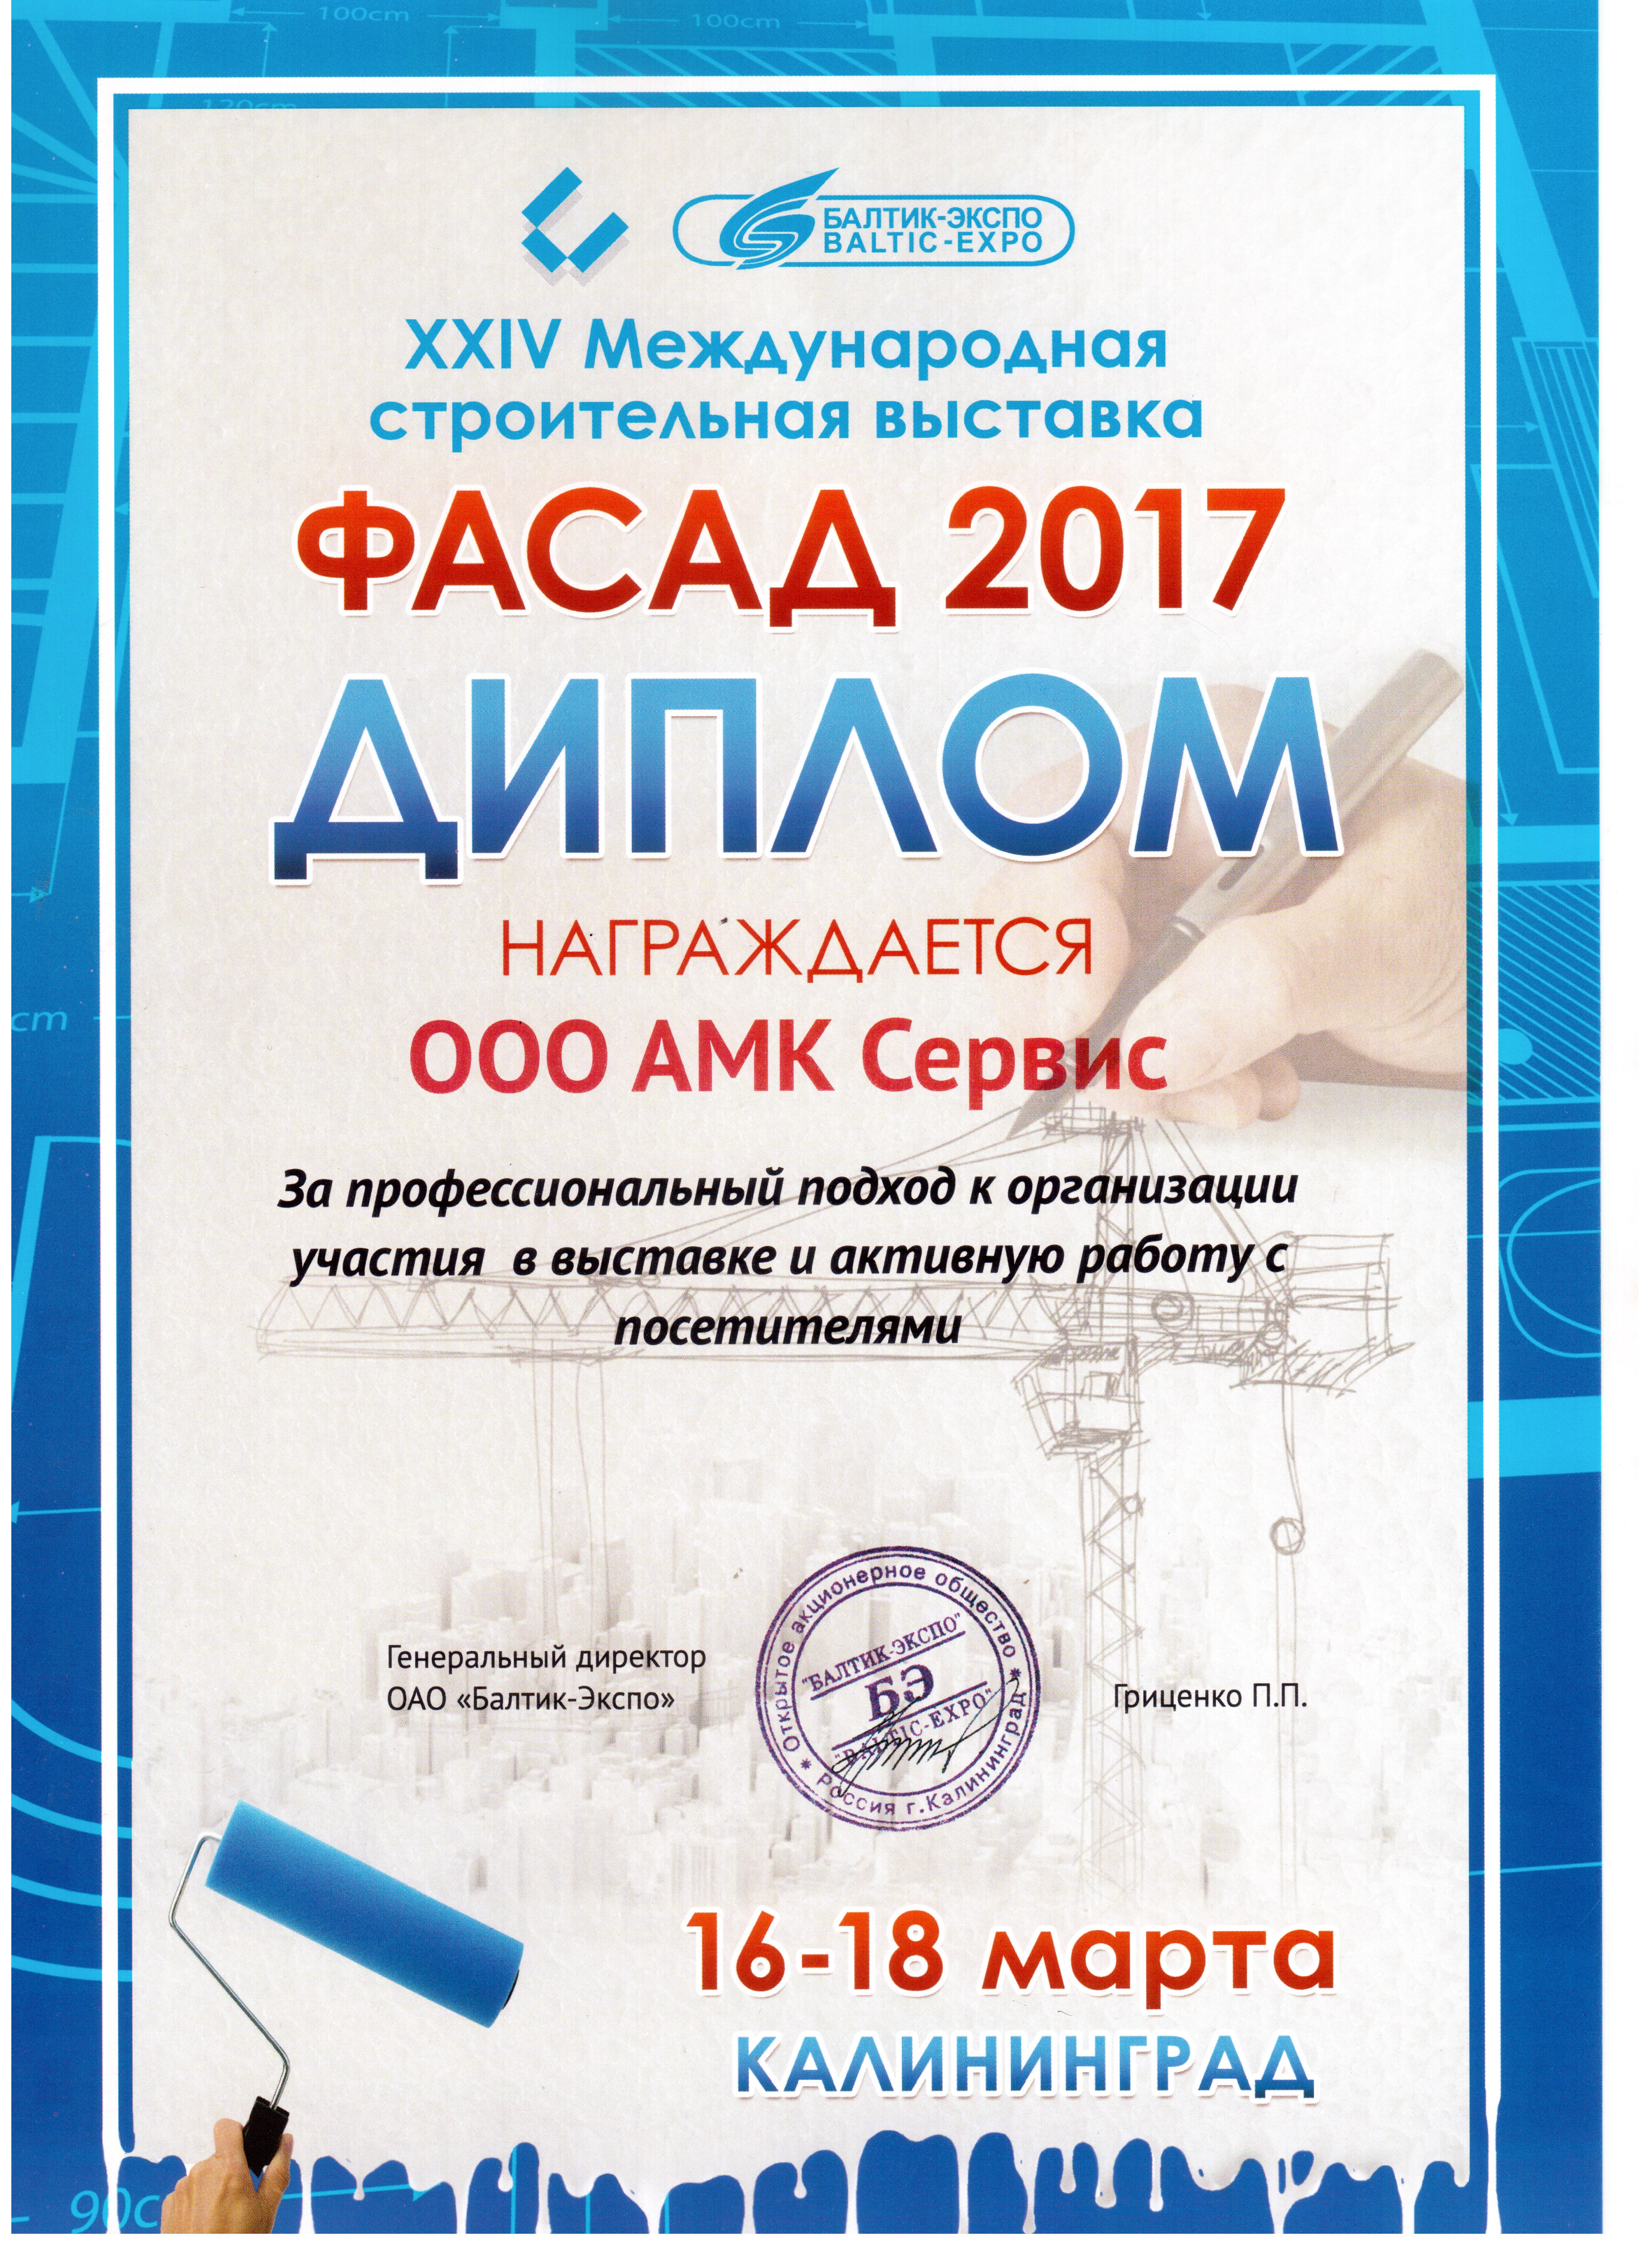 АМК Сервис производитель станков ЧПУ участник Фасад 2017 Калининград